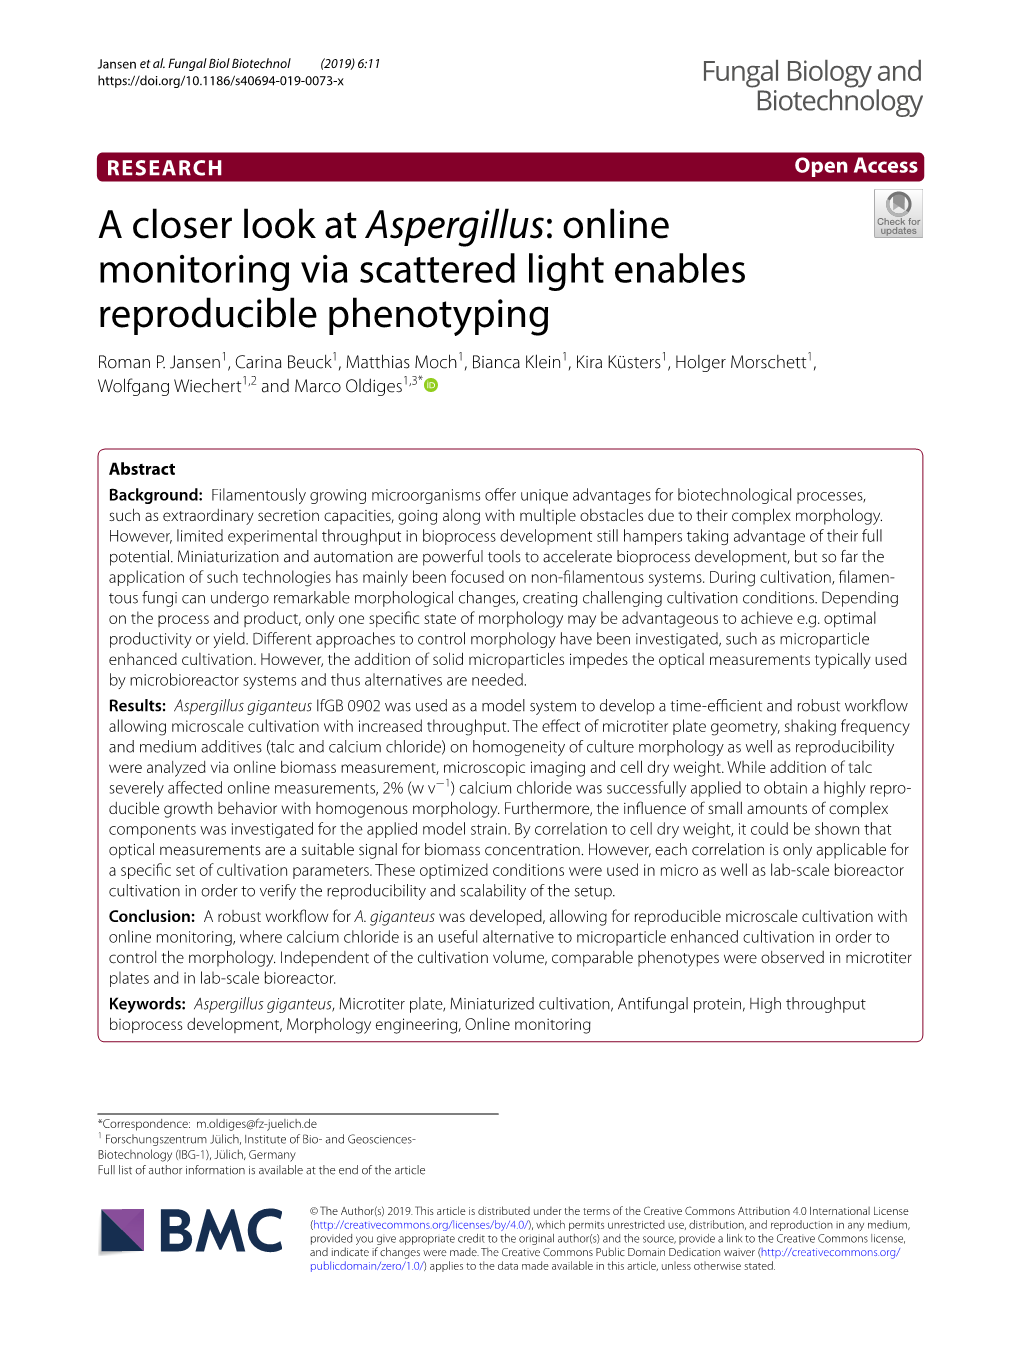 Aspergillus: Online Monitoring Via Scattered Light Enables Reproducible Phenotyping Roman P